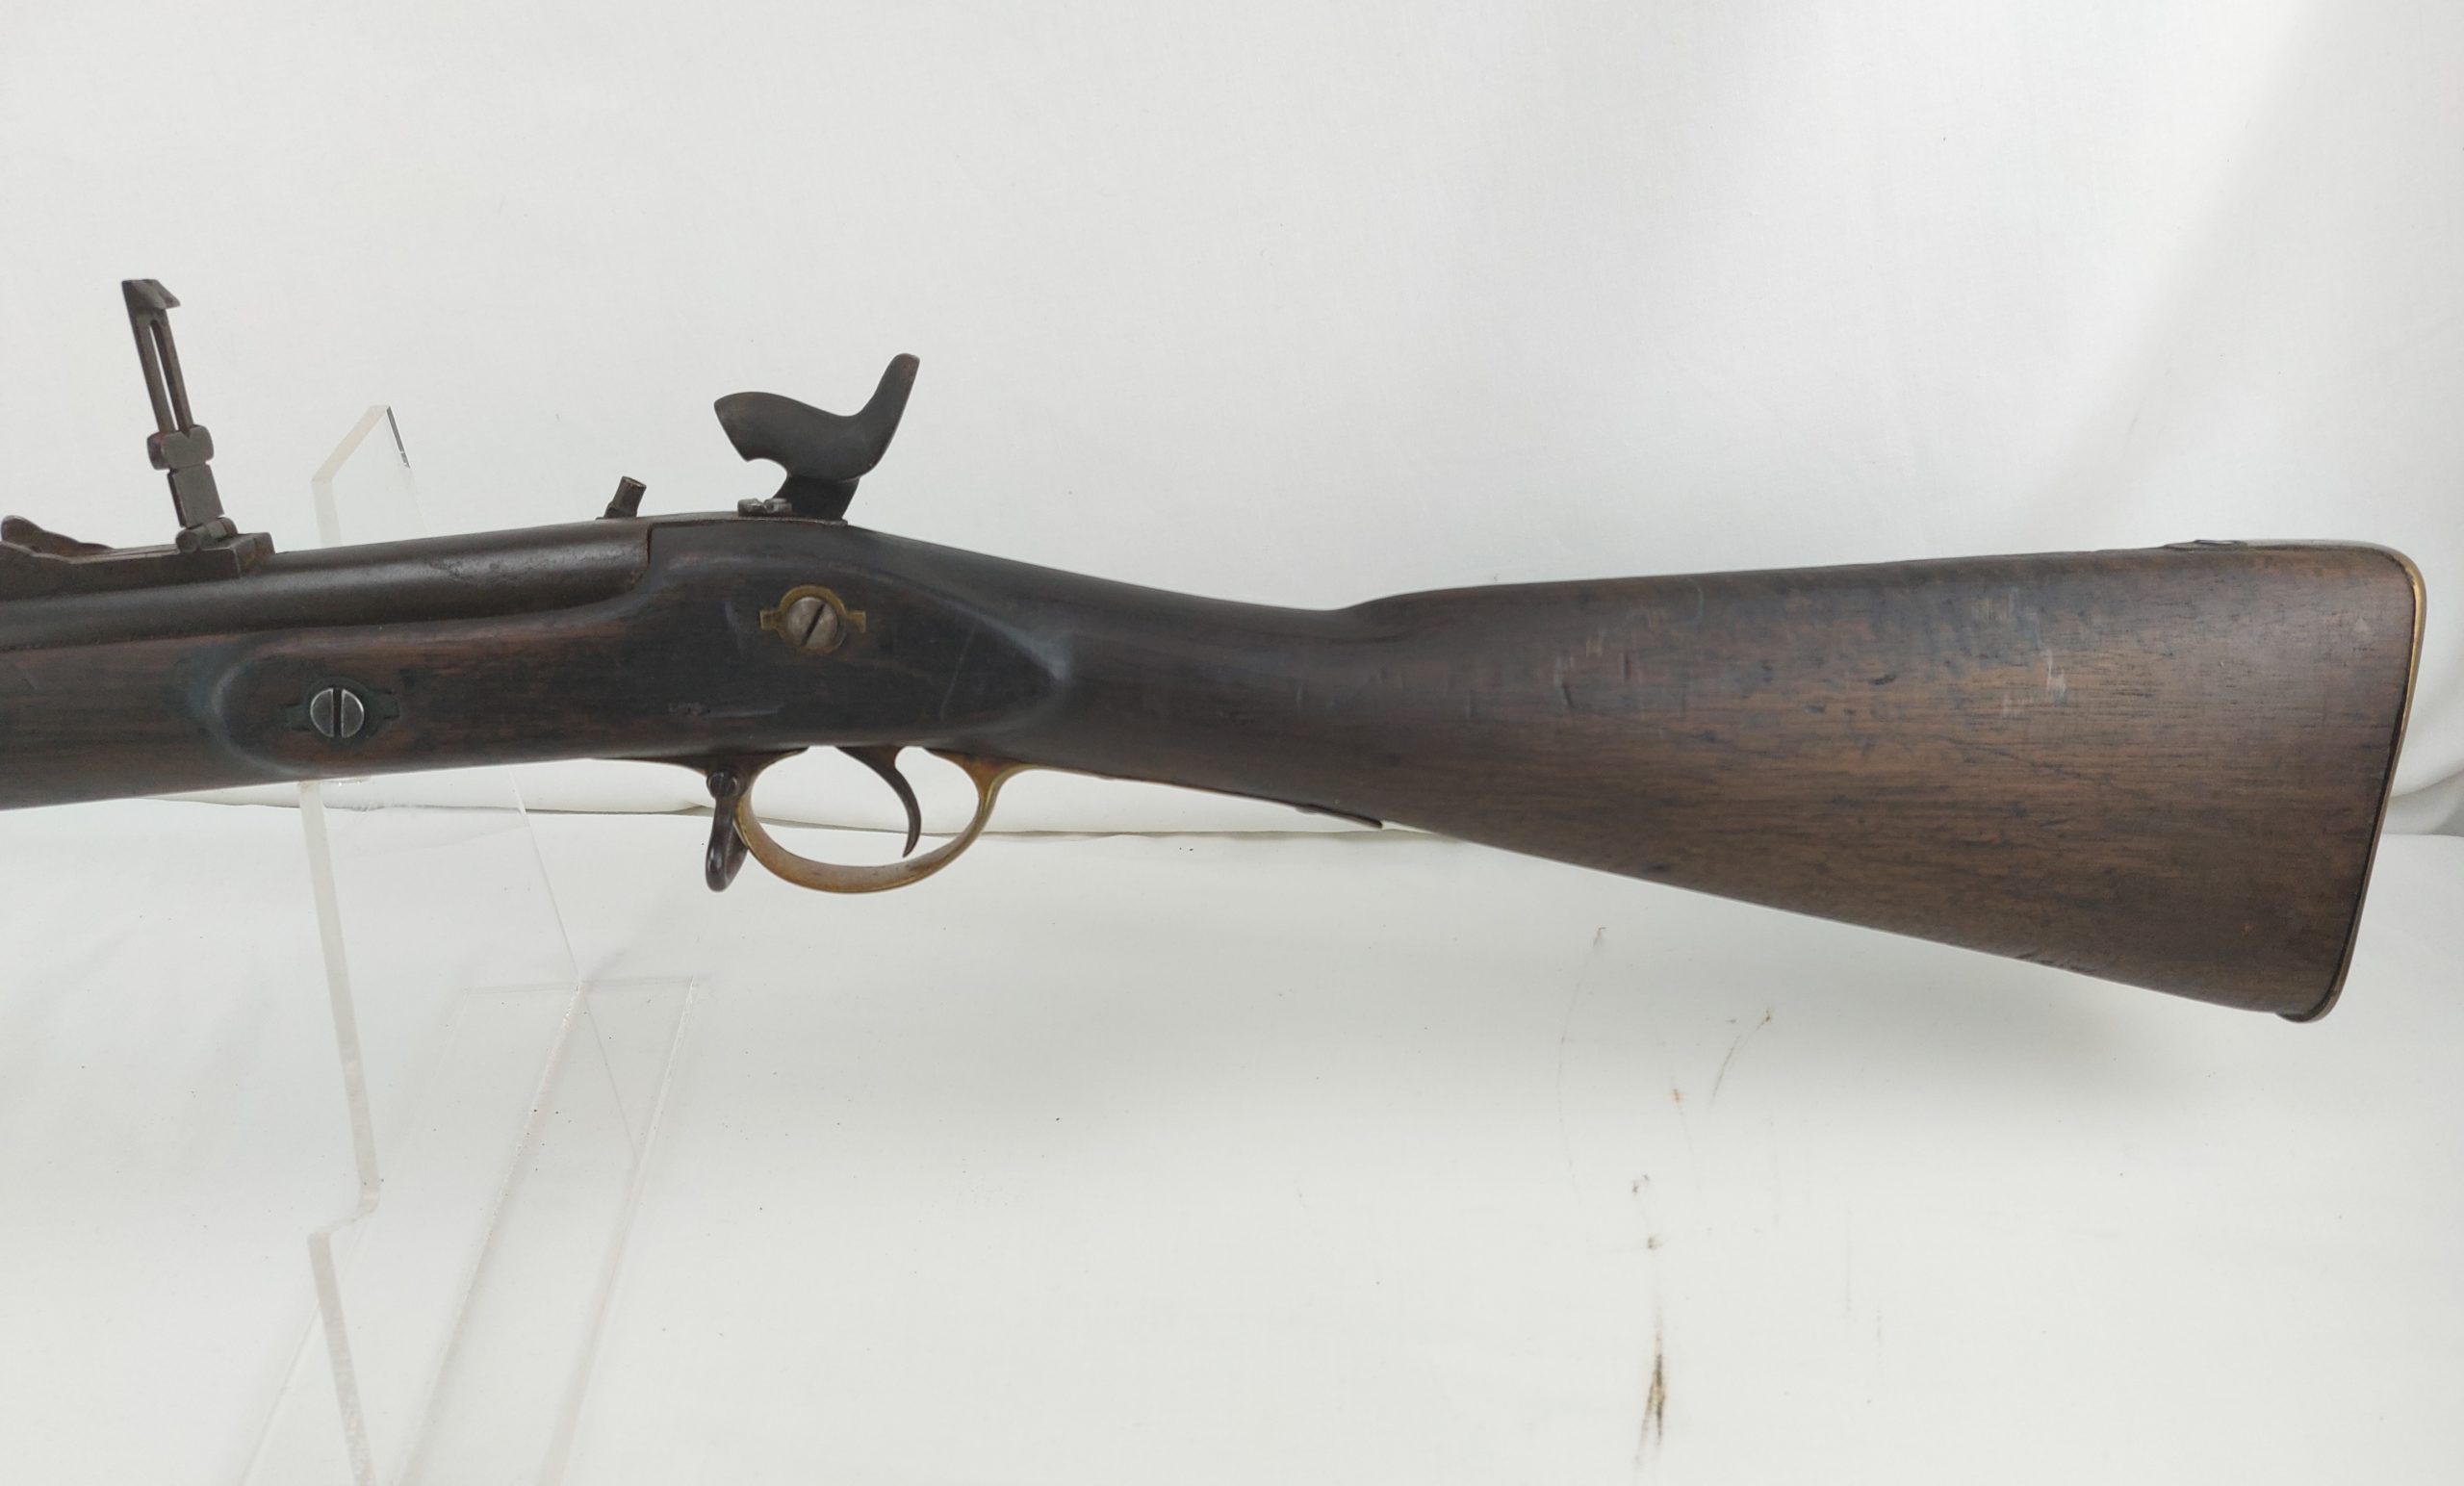 1853 Enfield Musket Rifle, England 1853 - Irongate Armory